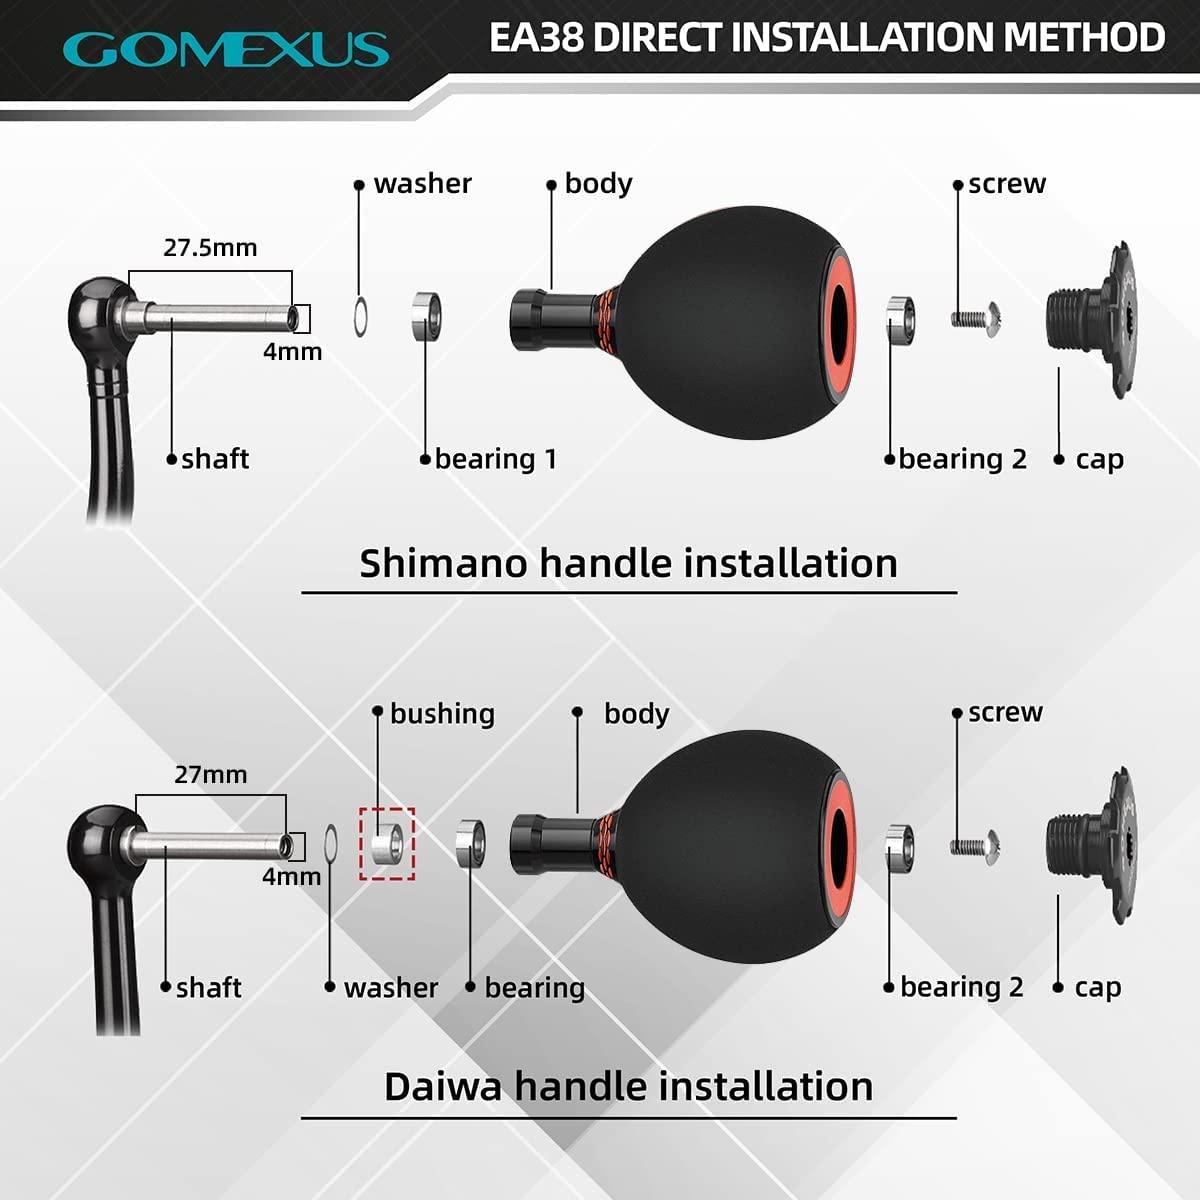  GOMEXUS Knob Compatible for Shimano daiwa Spinning